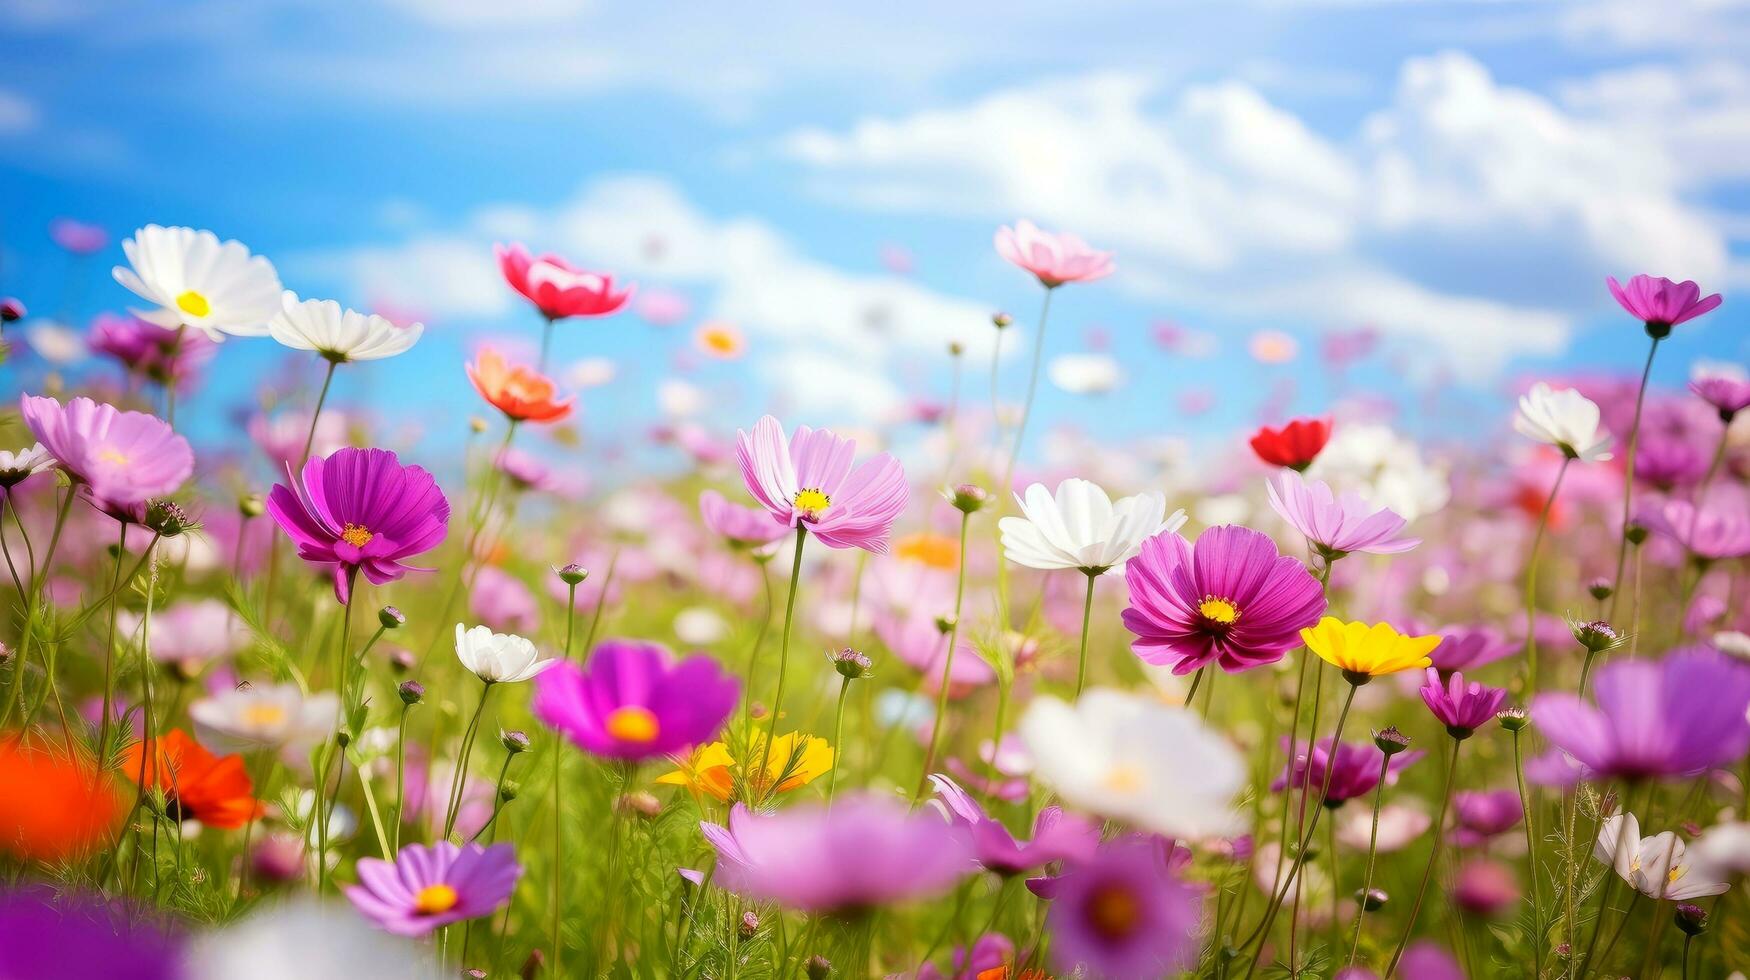 naturaleza floral antecedentes en temprano verano. vistoso natural primavera paisaje con con flores, suave selectivo enfocar, generativo ai ilustración foto